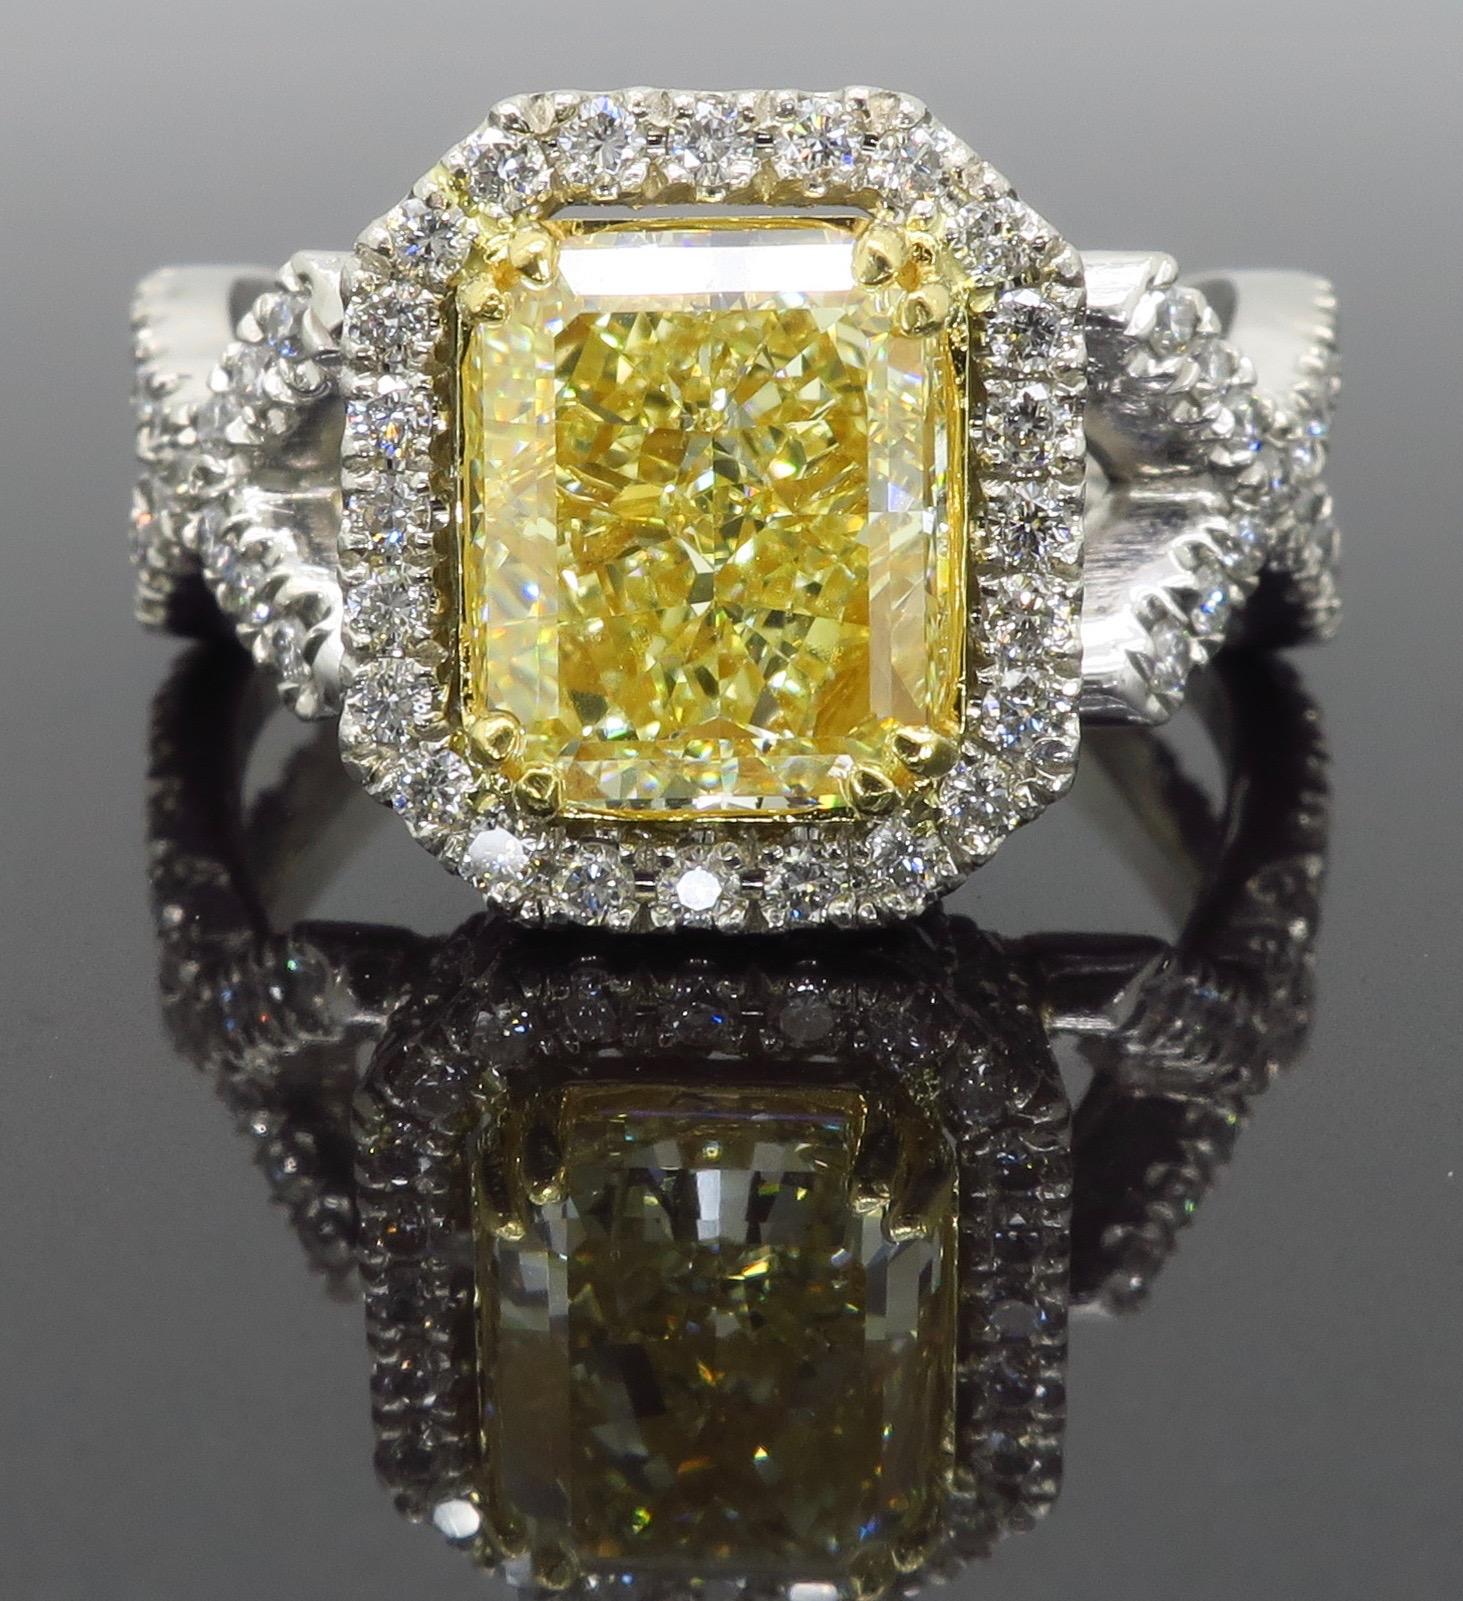 4 carat yellow diamond